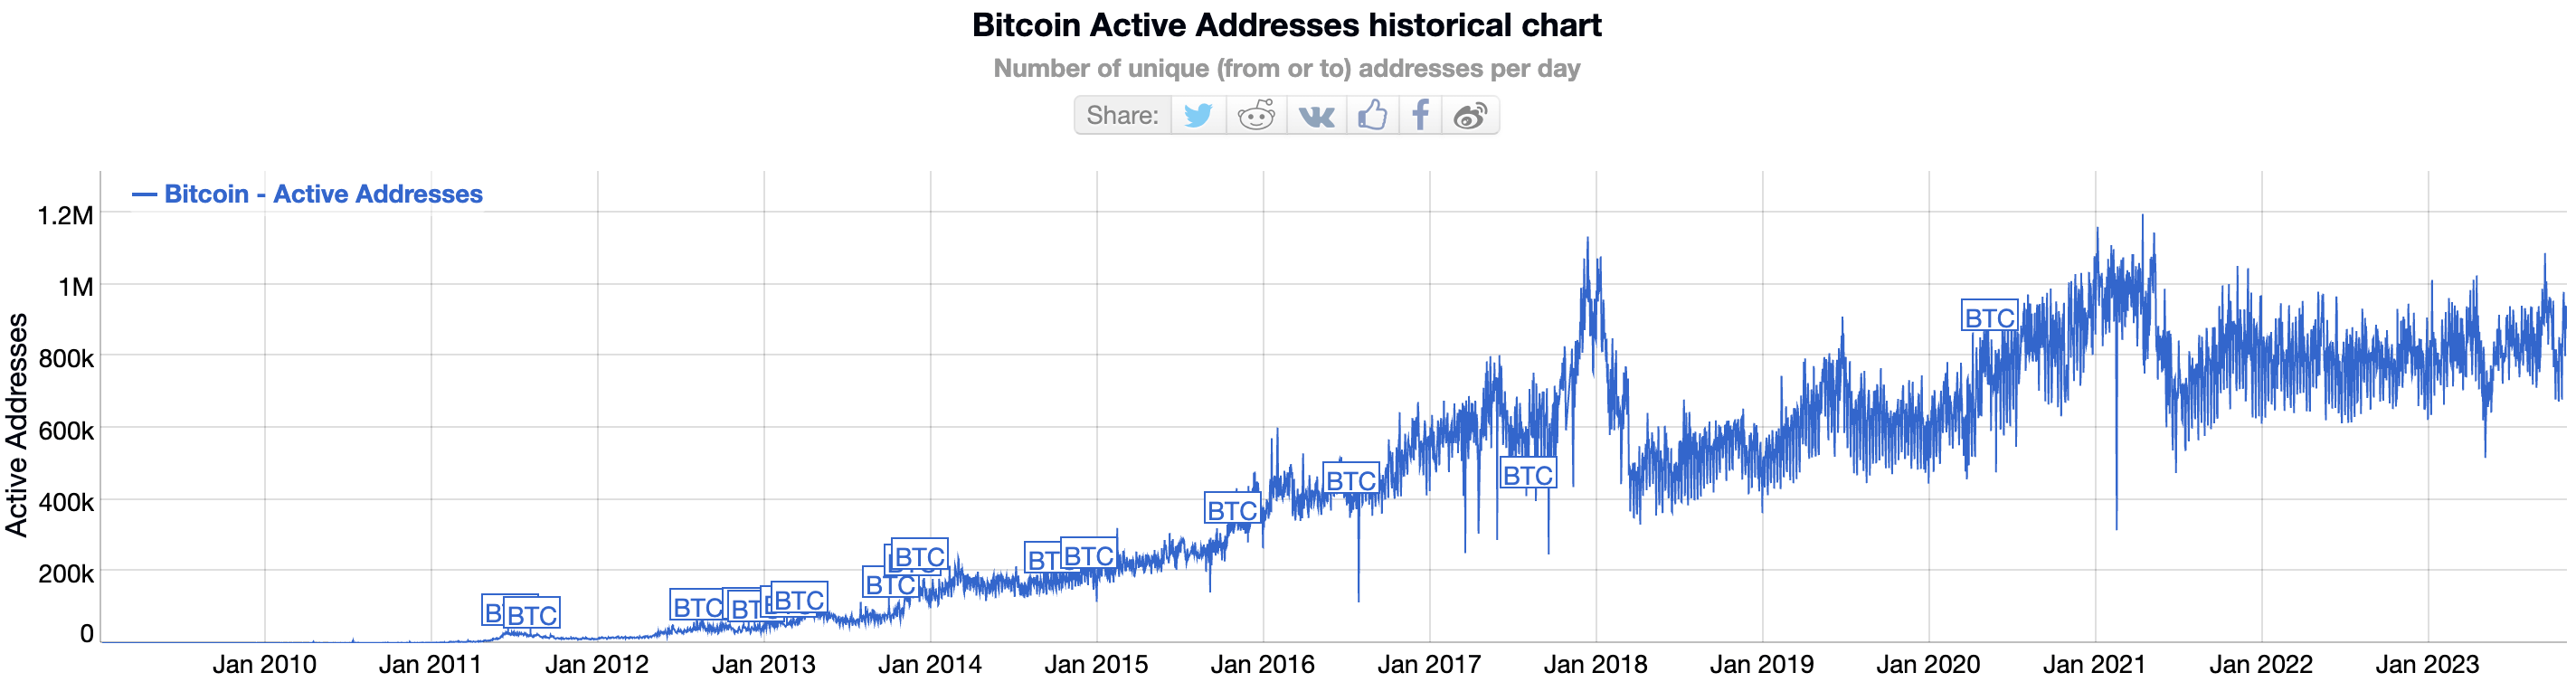 Bitcoin active addresses per day